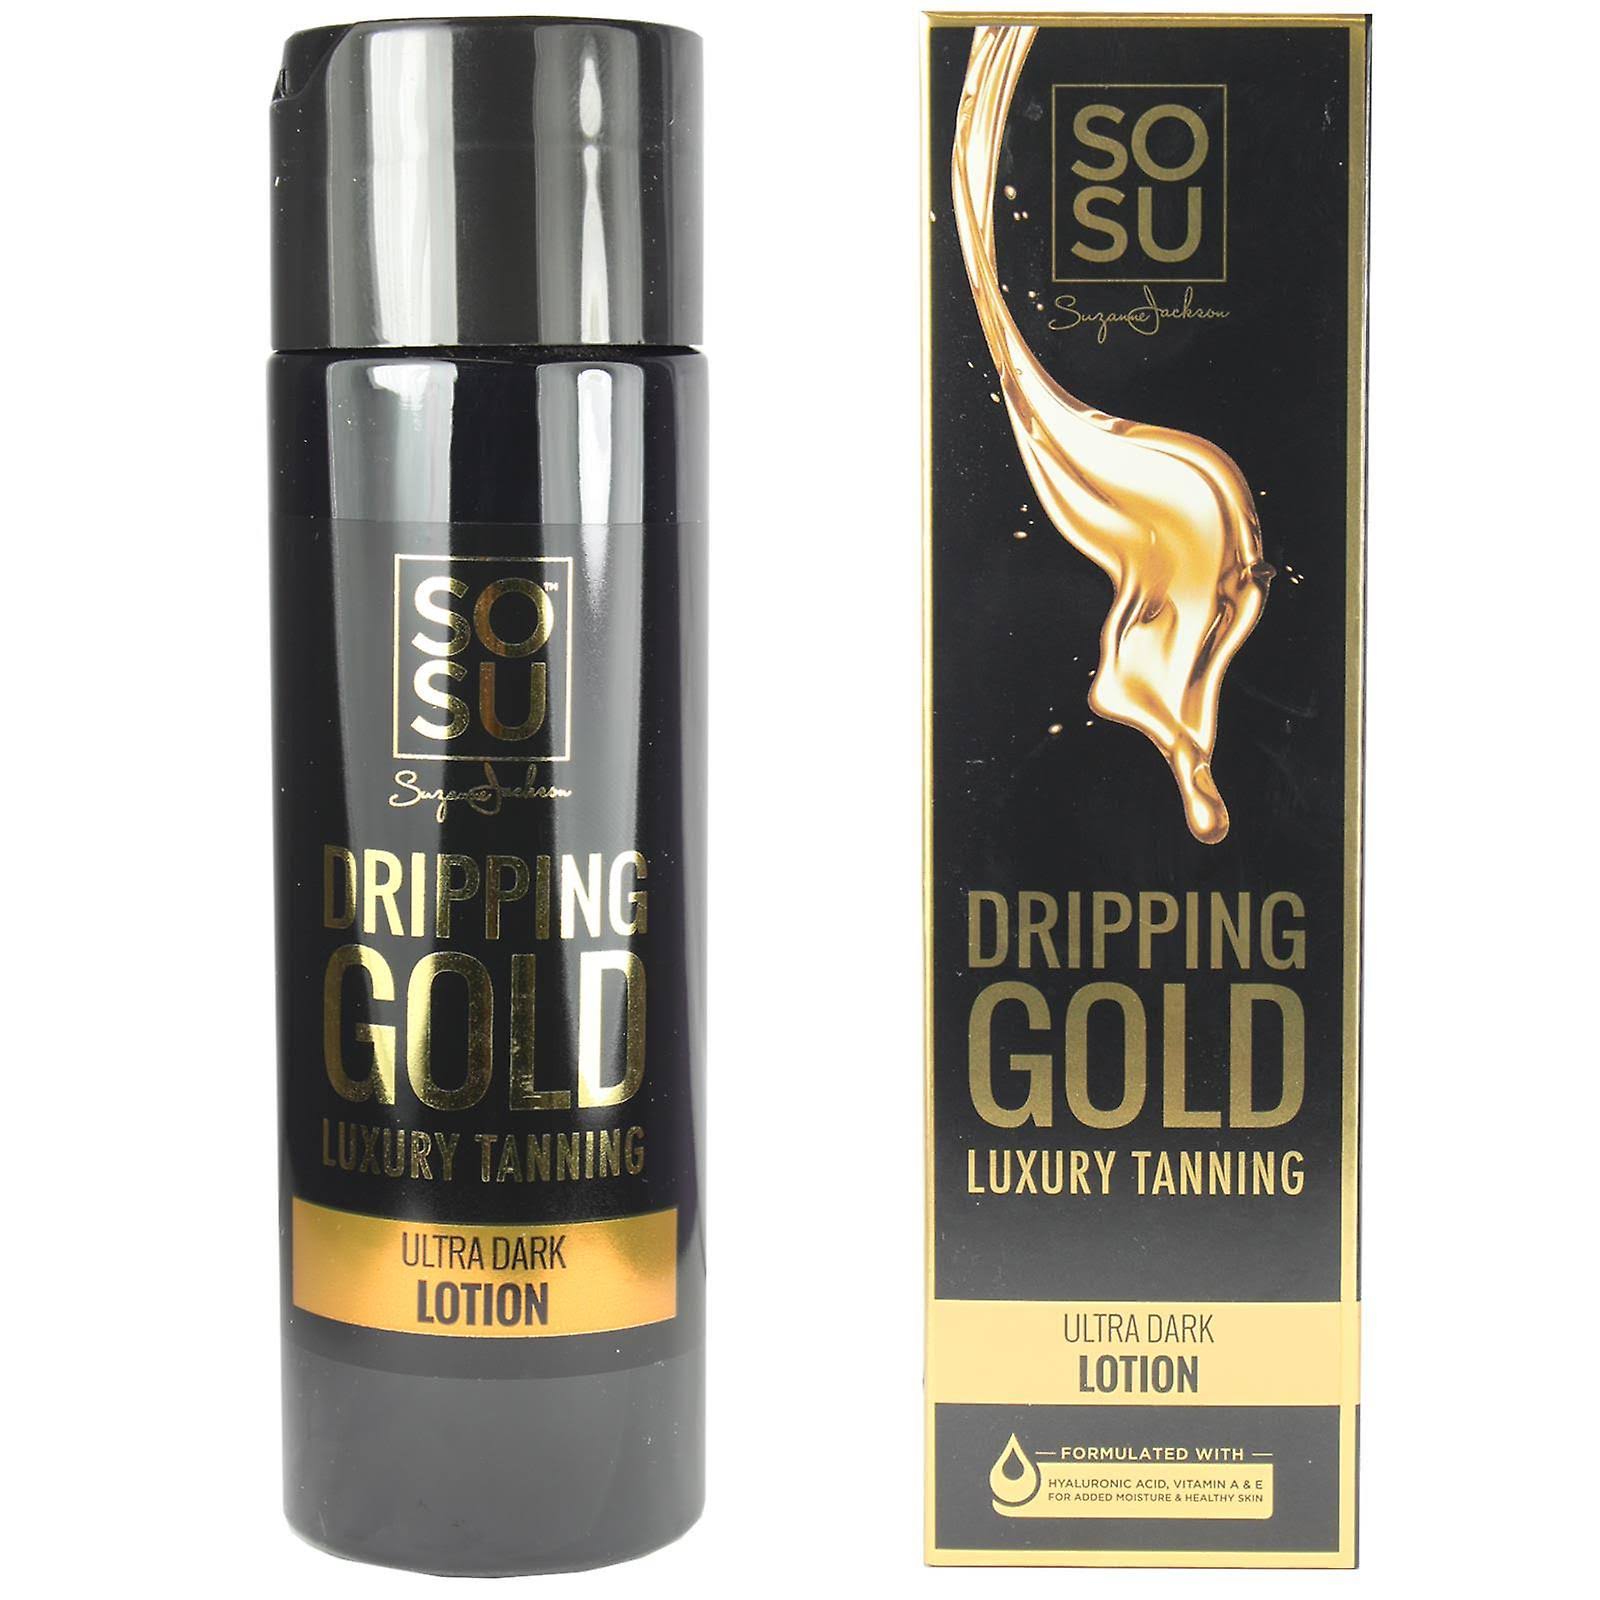 SOSU by Suzanne Jackson Dripping Gold Luxury Tanning Lotion - Dark